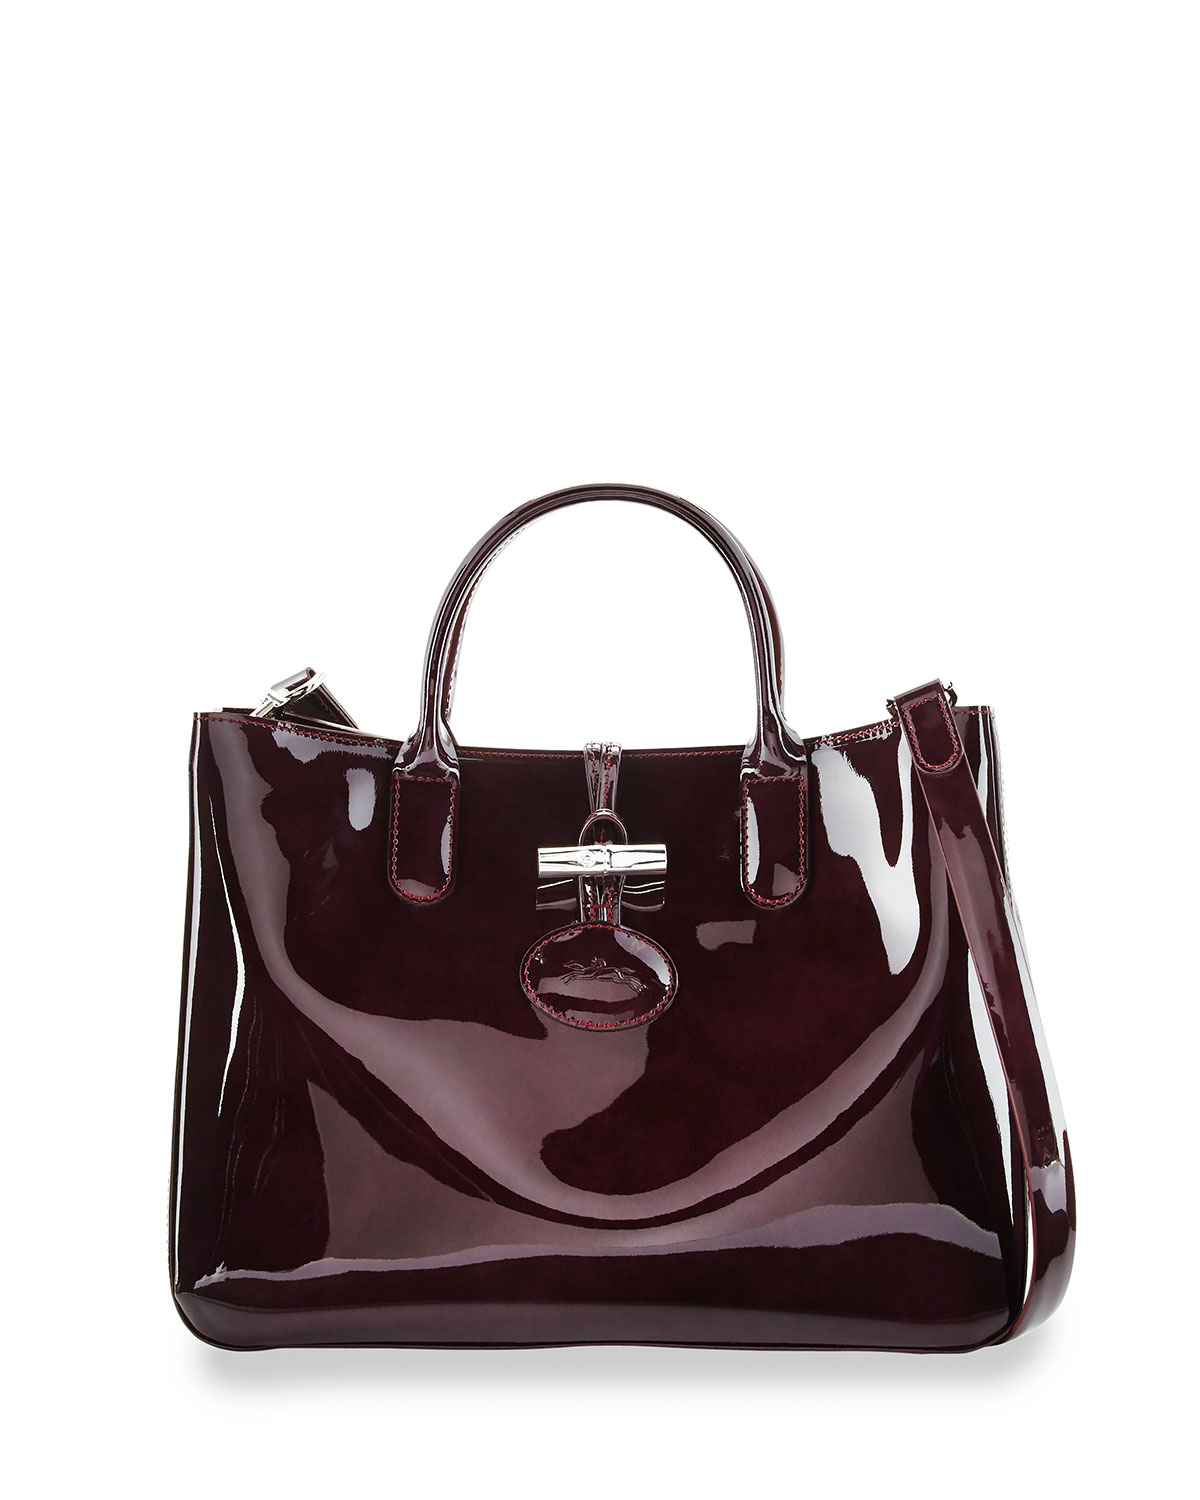 Lyst - Longchamp Roseau Medium Patent Tote Bag With Strap in Purple